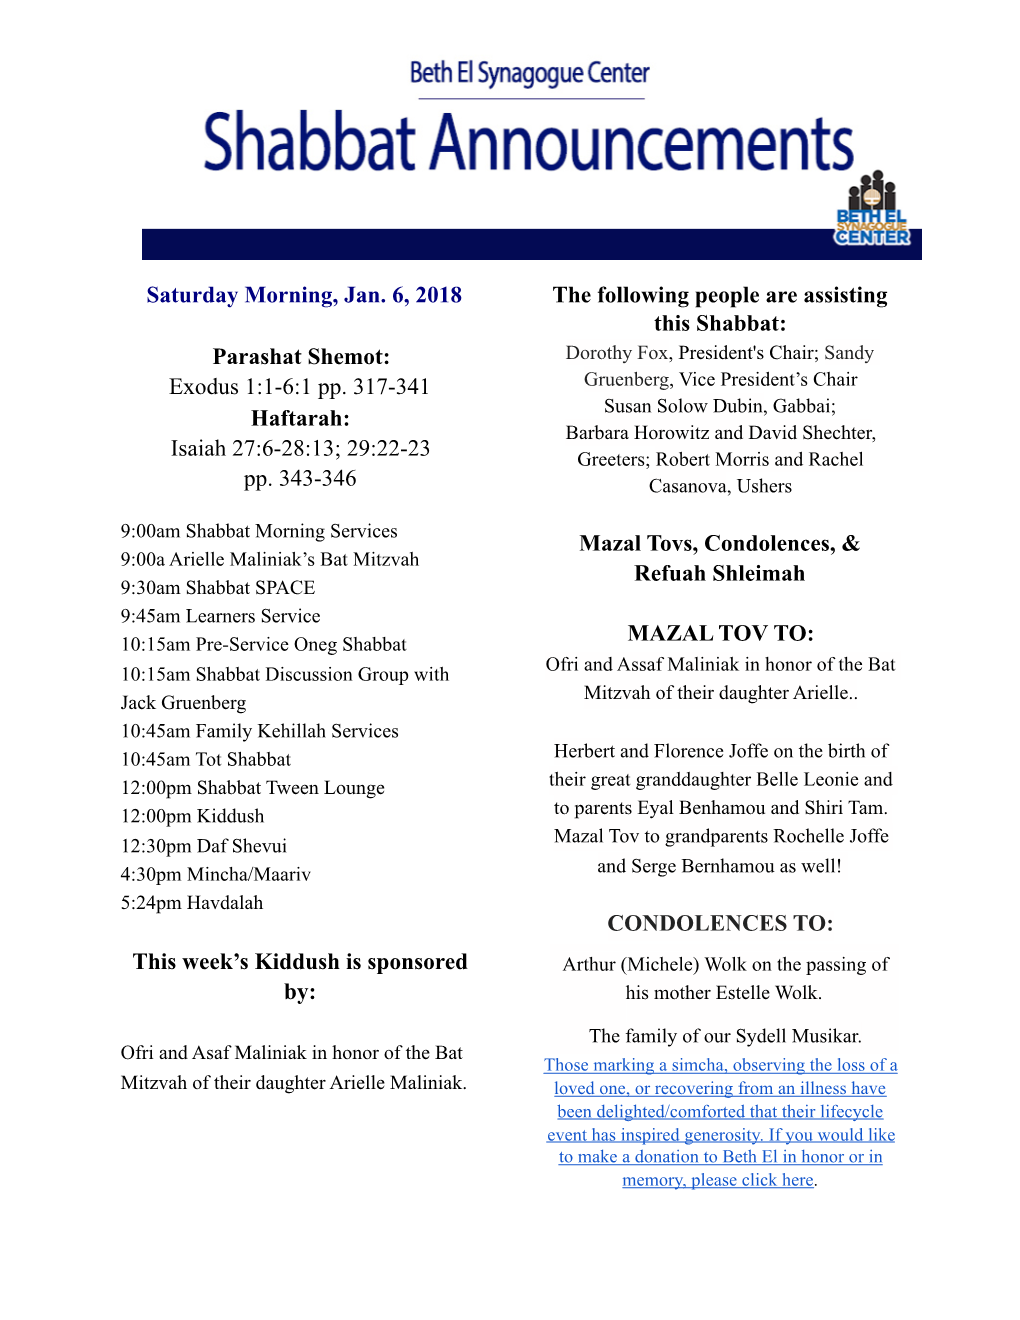 Shabbat Announcements 1.5.18